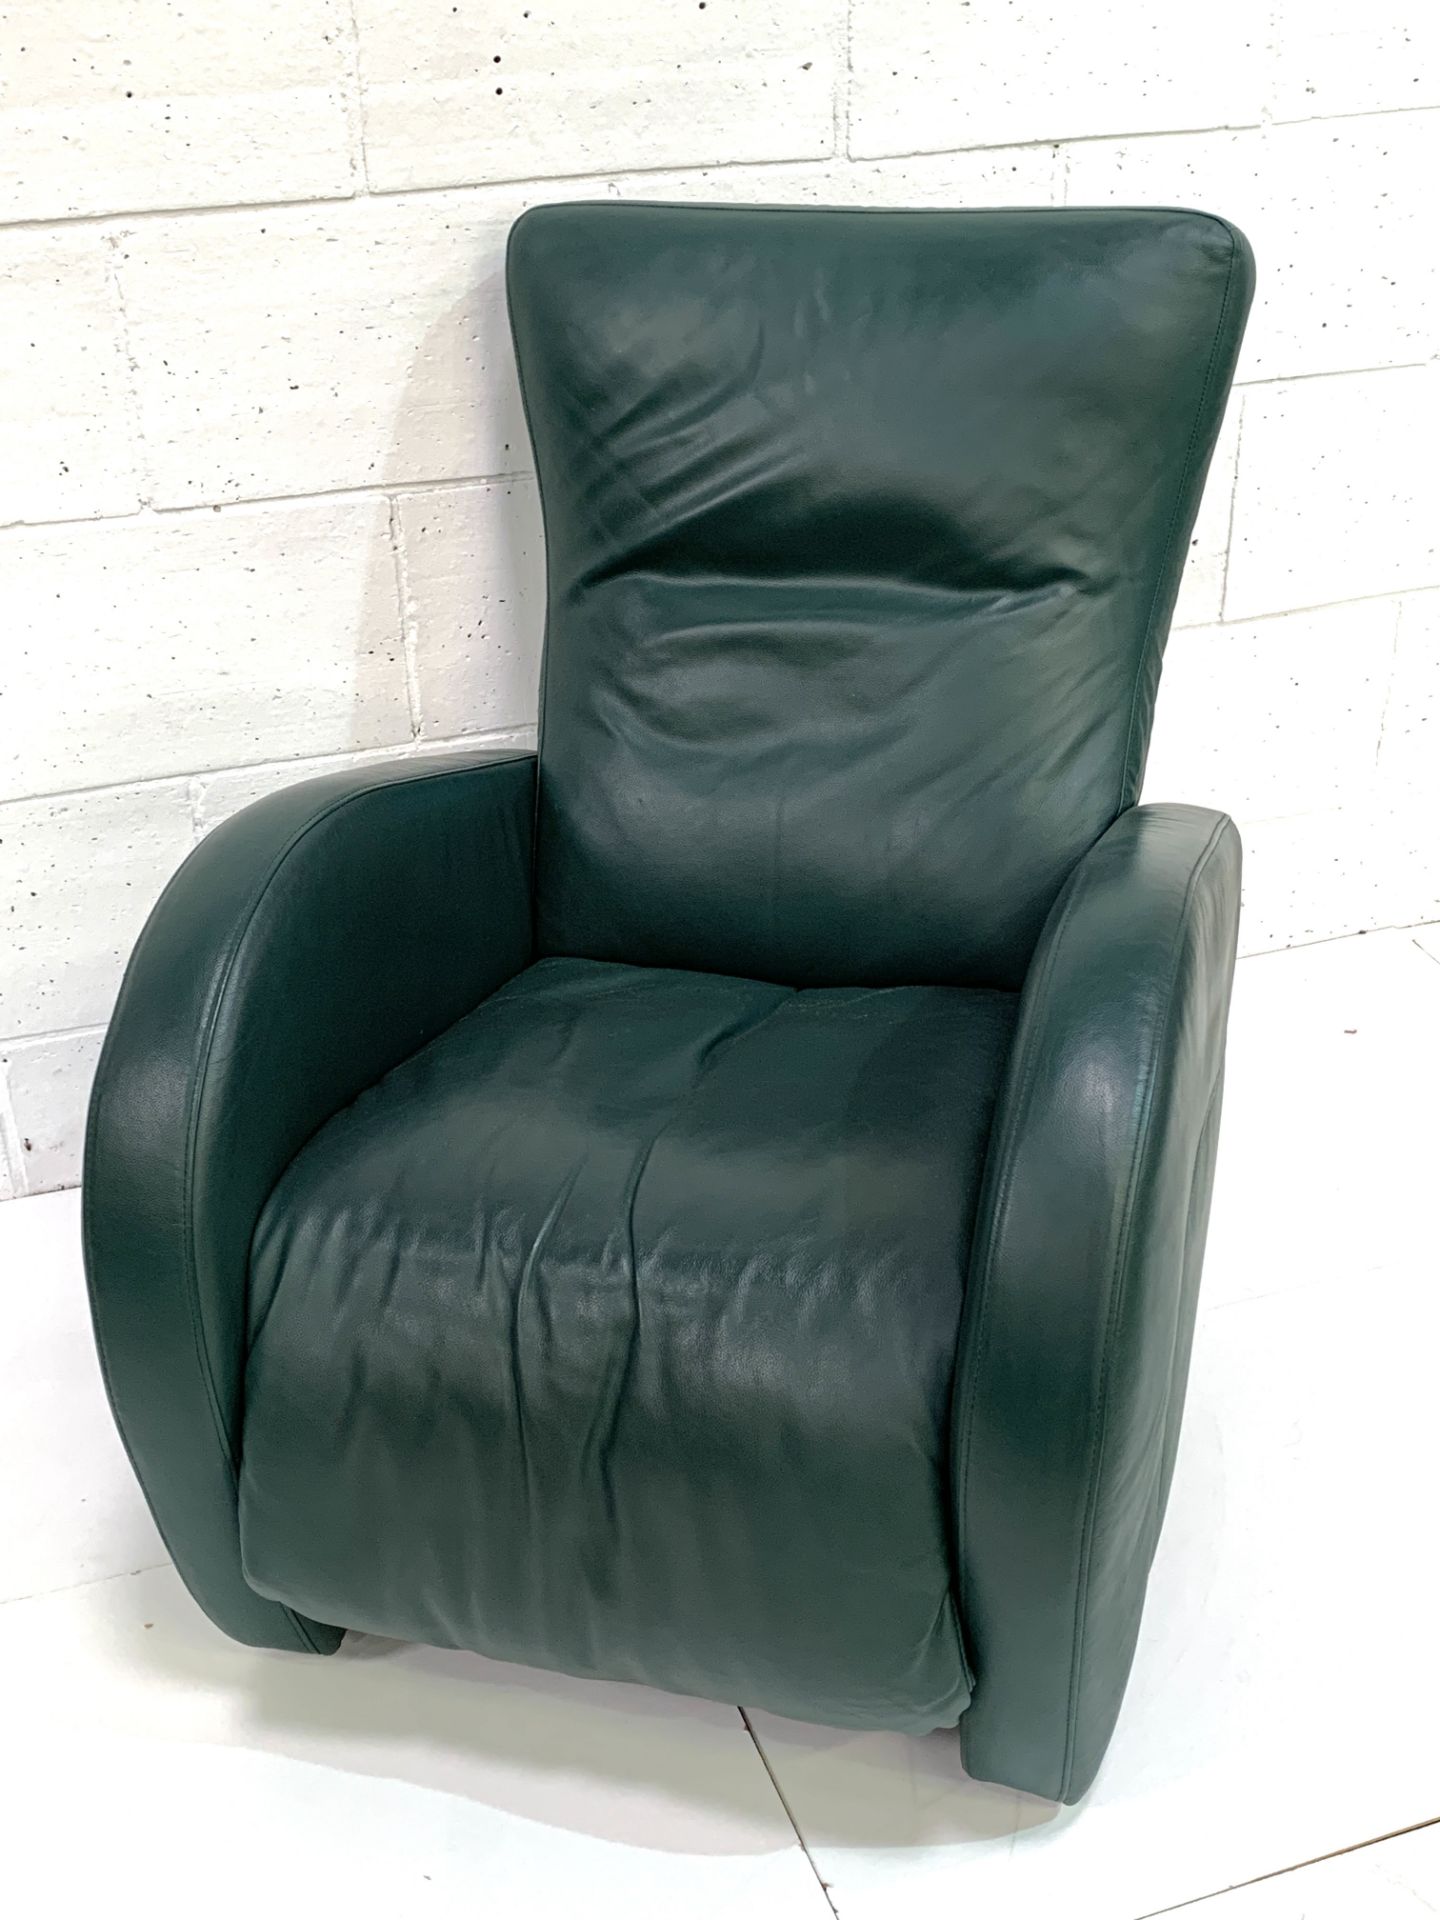 Steinhoff TV reclinable armchair - Image 3 of 4